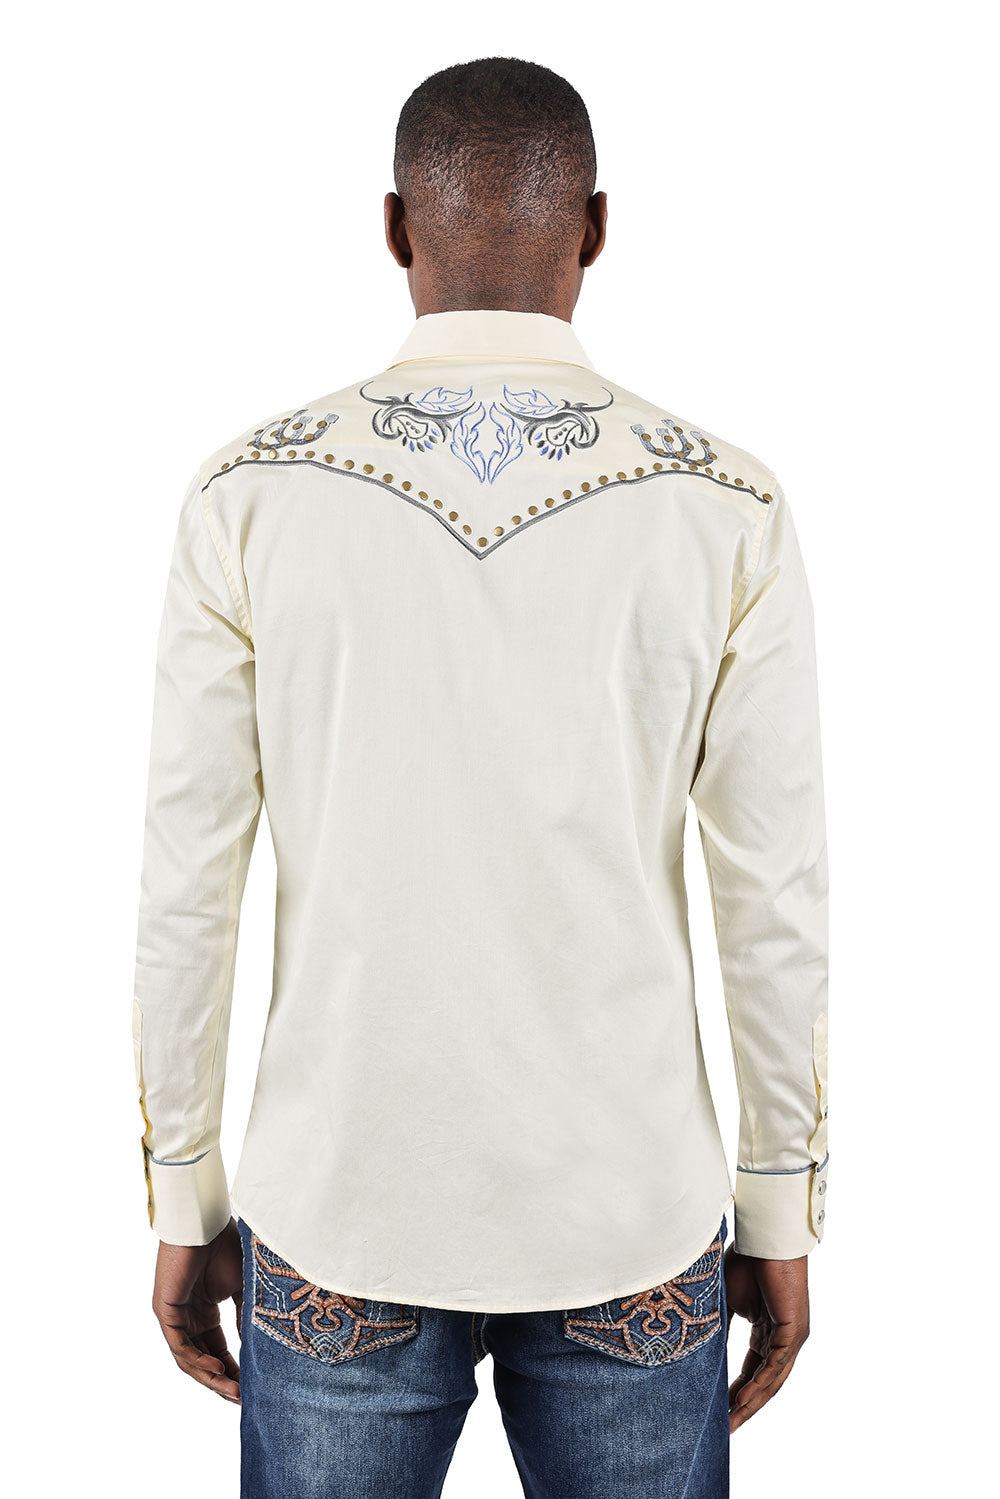 BARABAS Men's Horseshoe Floral Embroidery Long Sleeve Shirts 3WS6 Cream